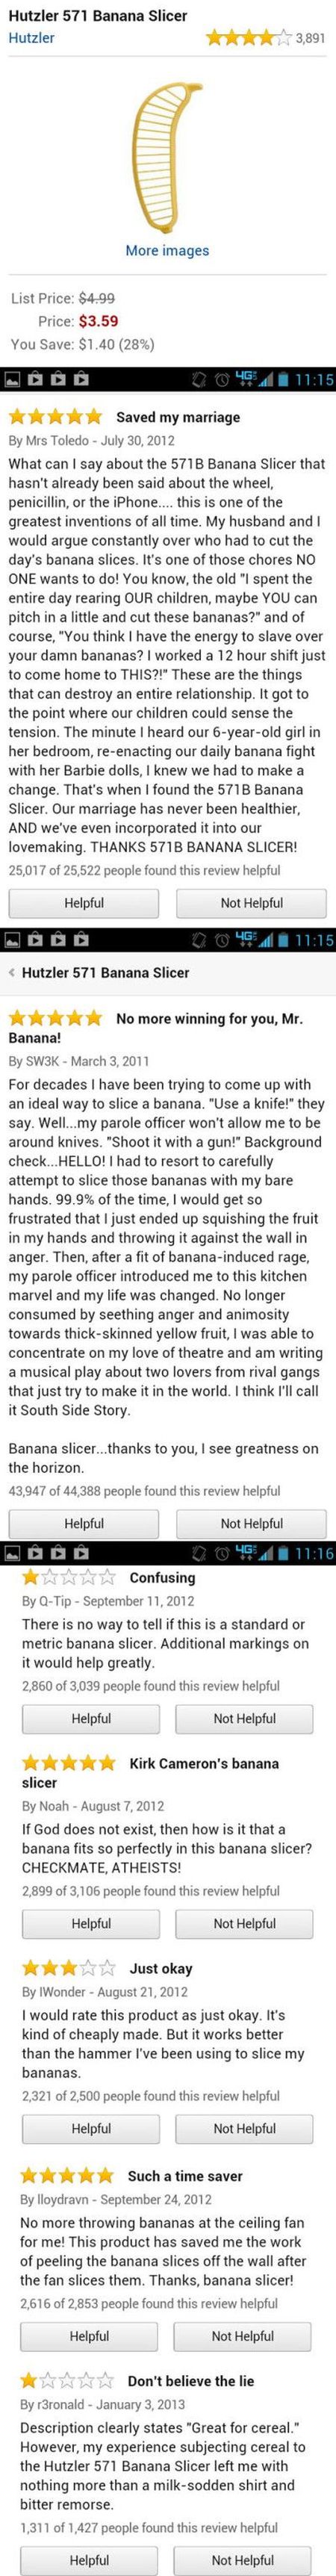 banana slicer reviews funny